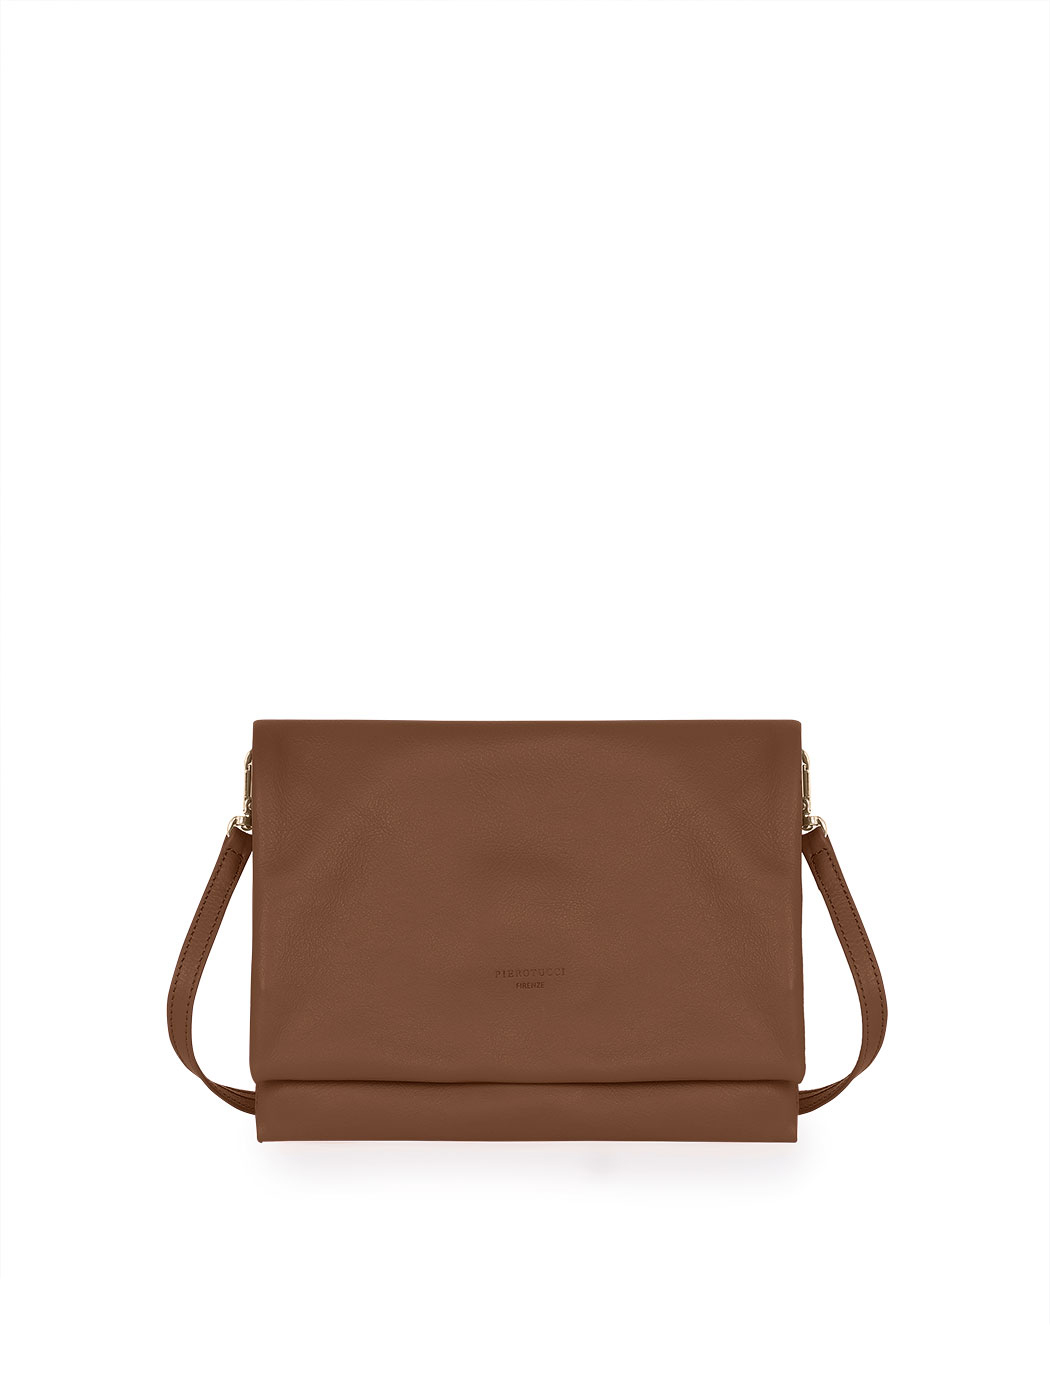 Women's Wallet Dark Brown Genuine Leather Checkbook Pocketbook Clutch Purse  at Amazon Women's Clothing store